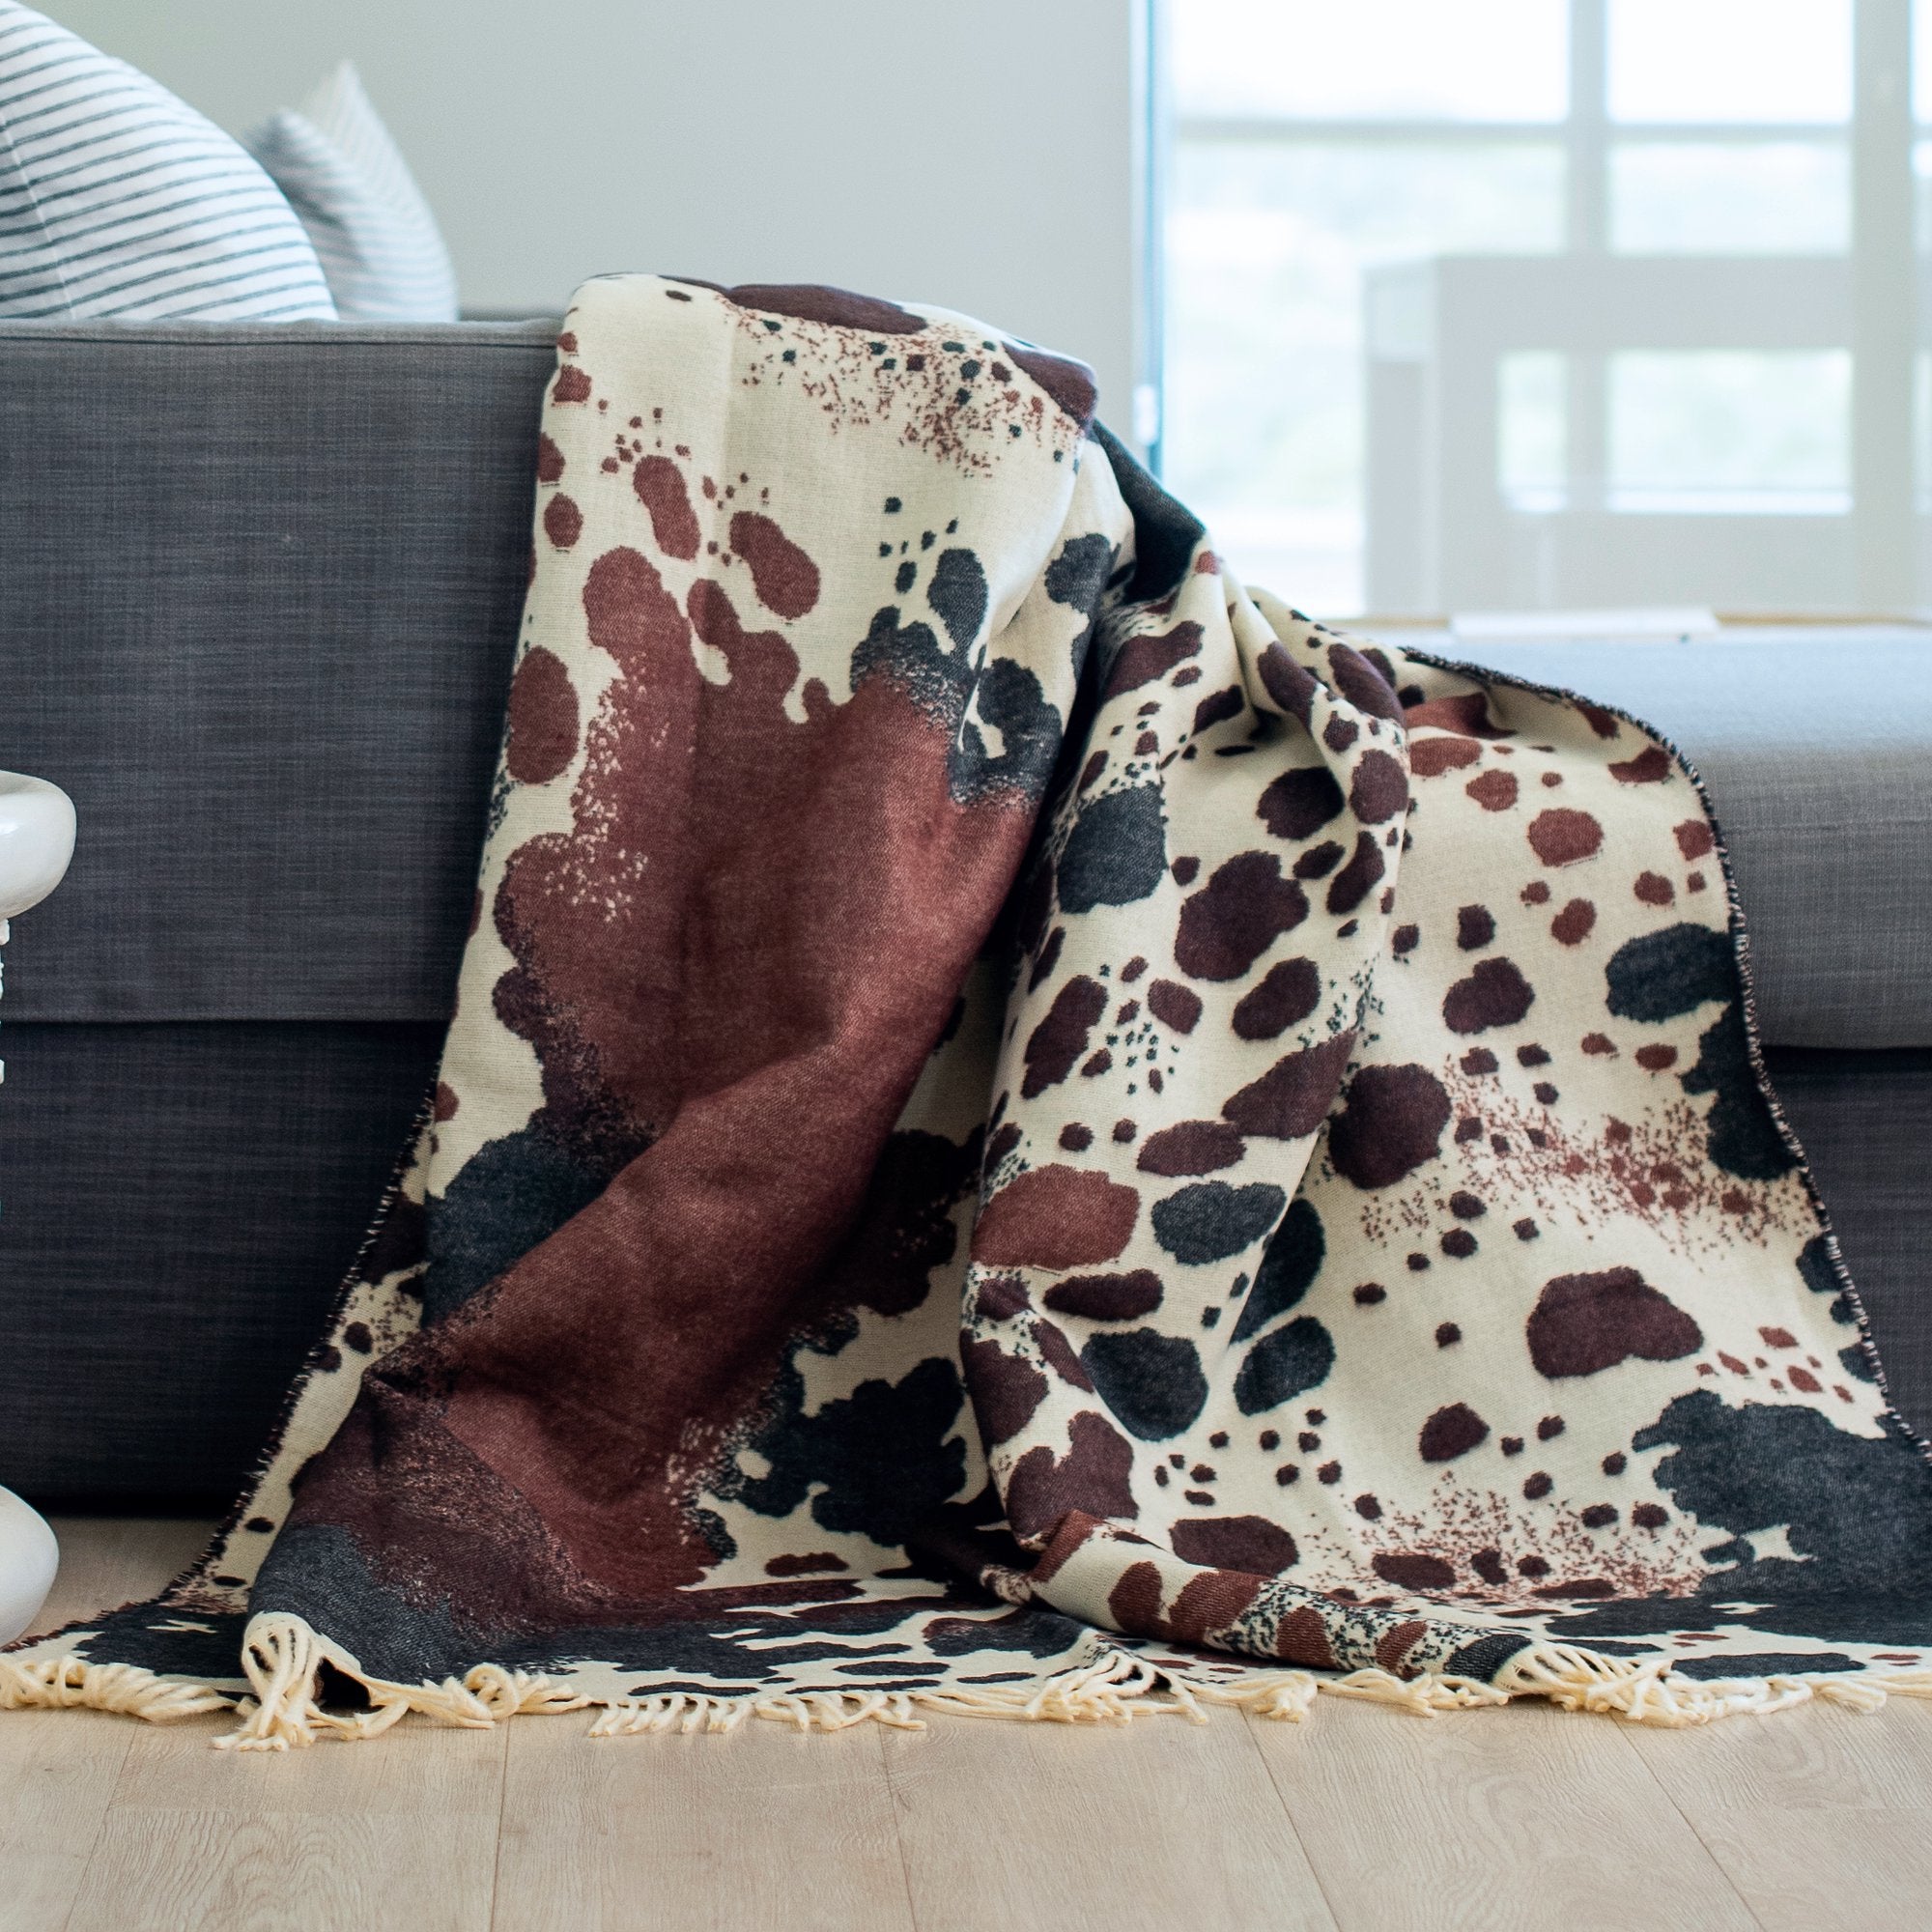 Cozy African sofa blanket - Nguni - 180 x 140 cm